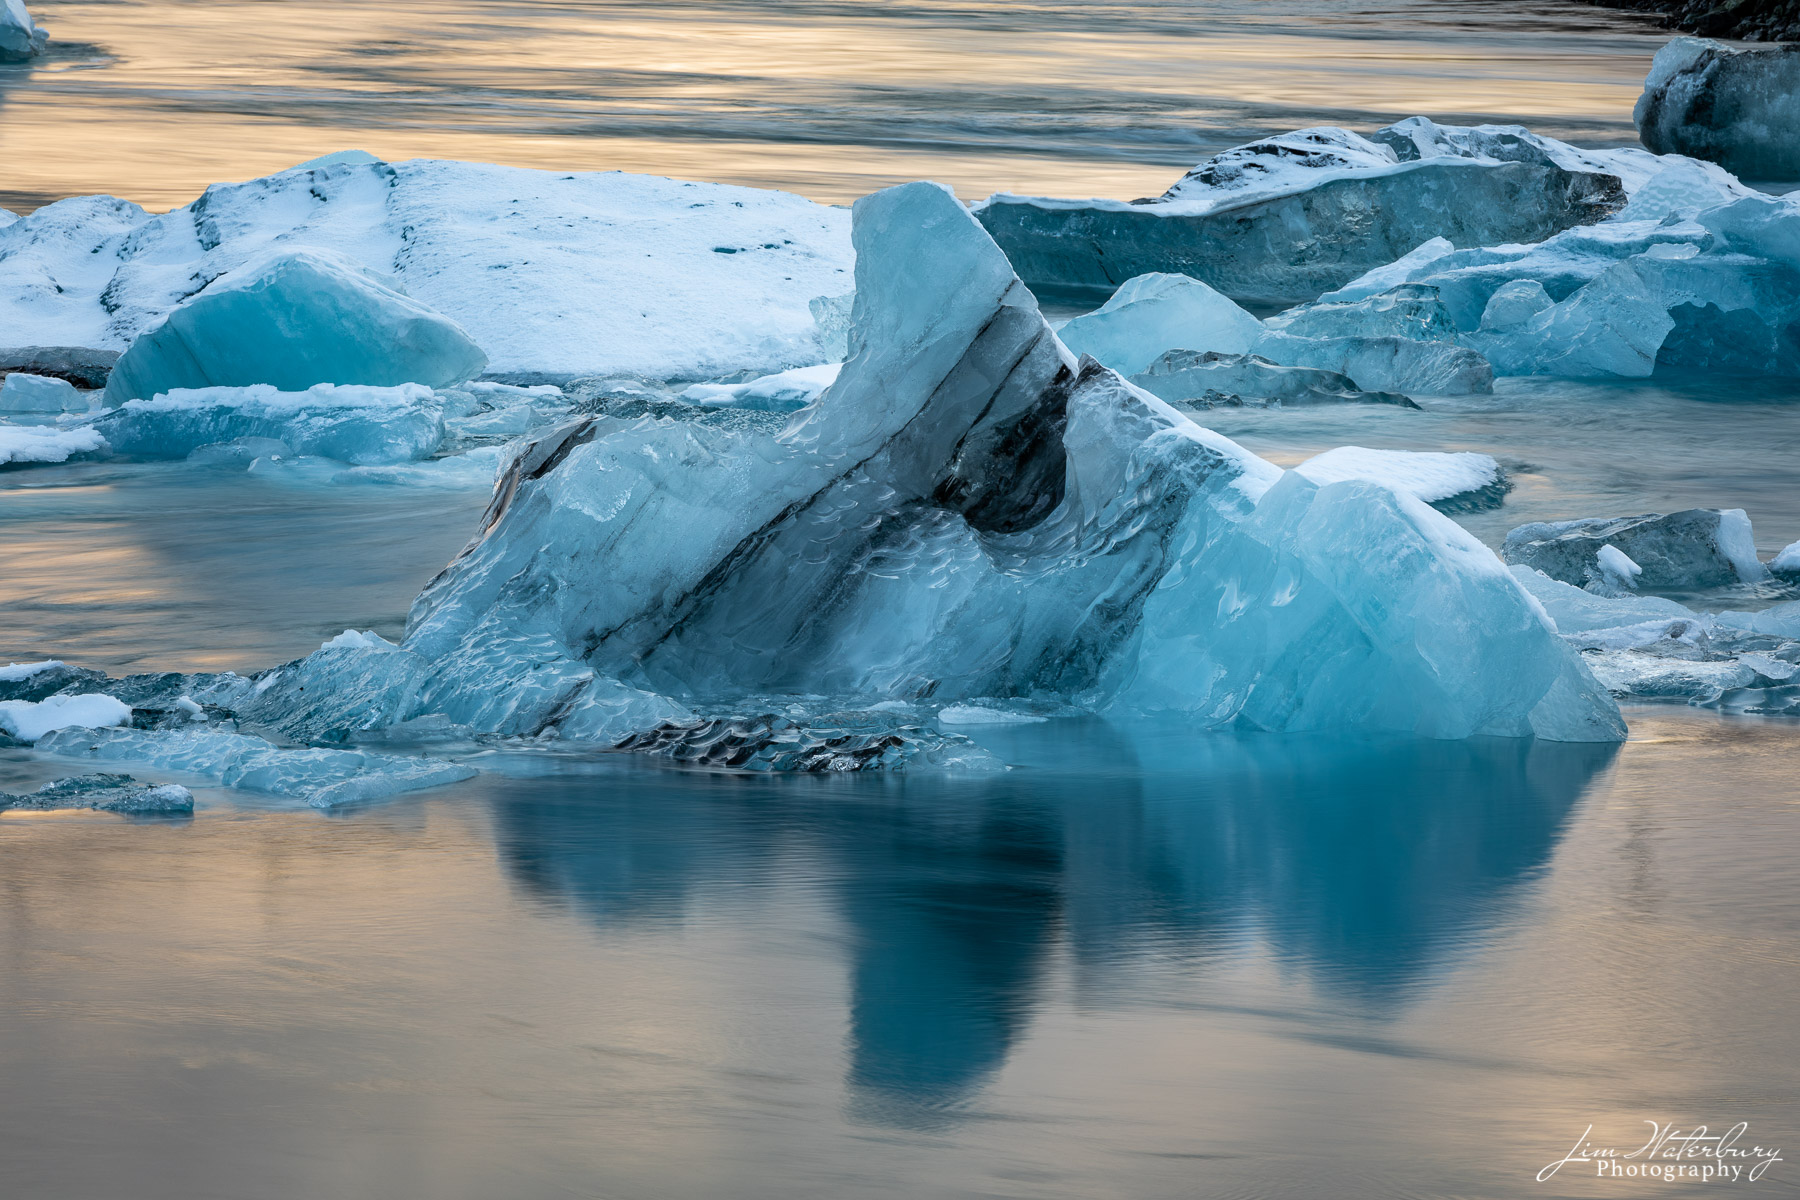 Icebergs, broken off from the main glacier, float in the Jokulsarlon glacial lagoon in Iceland.